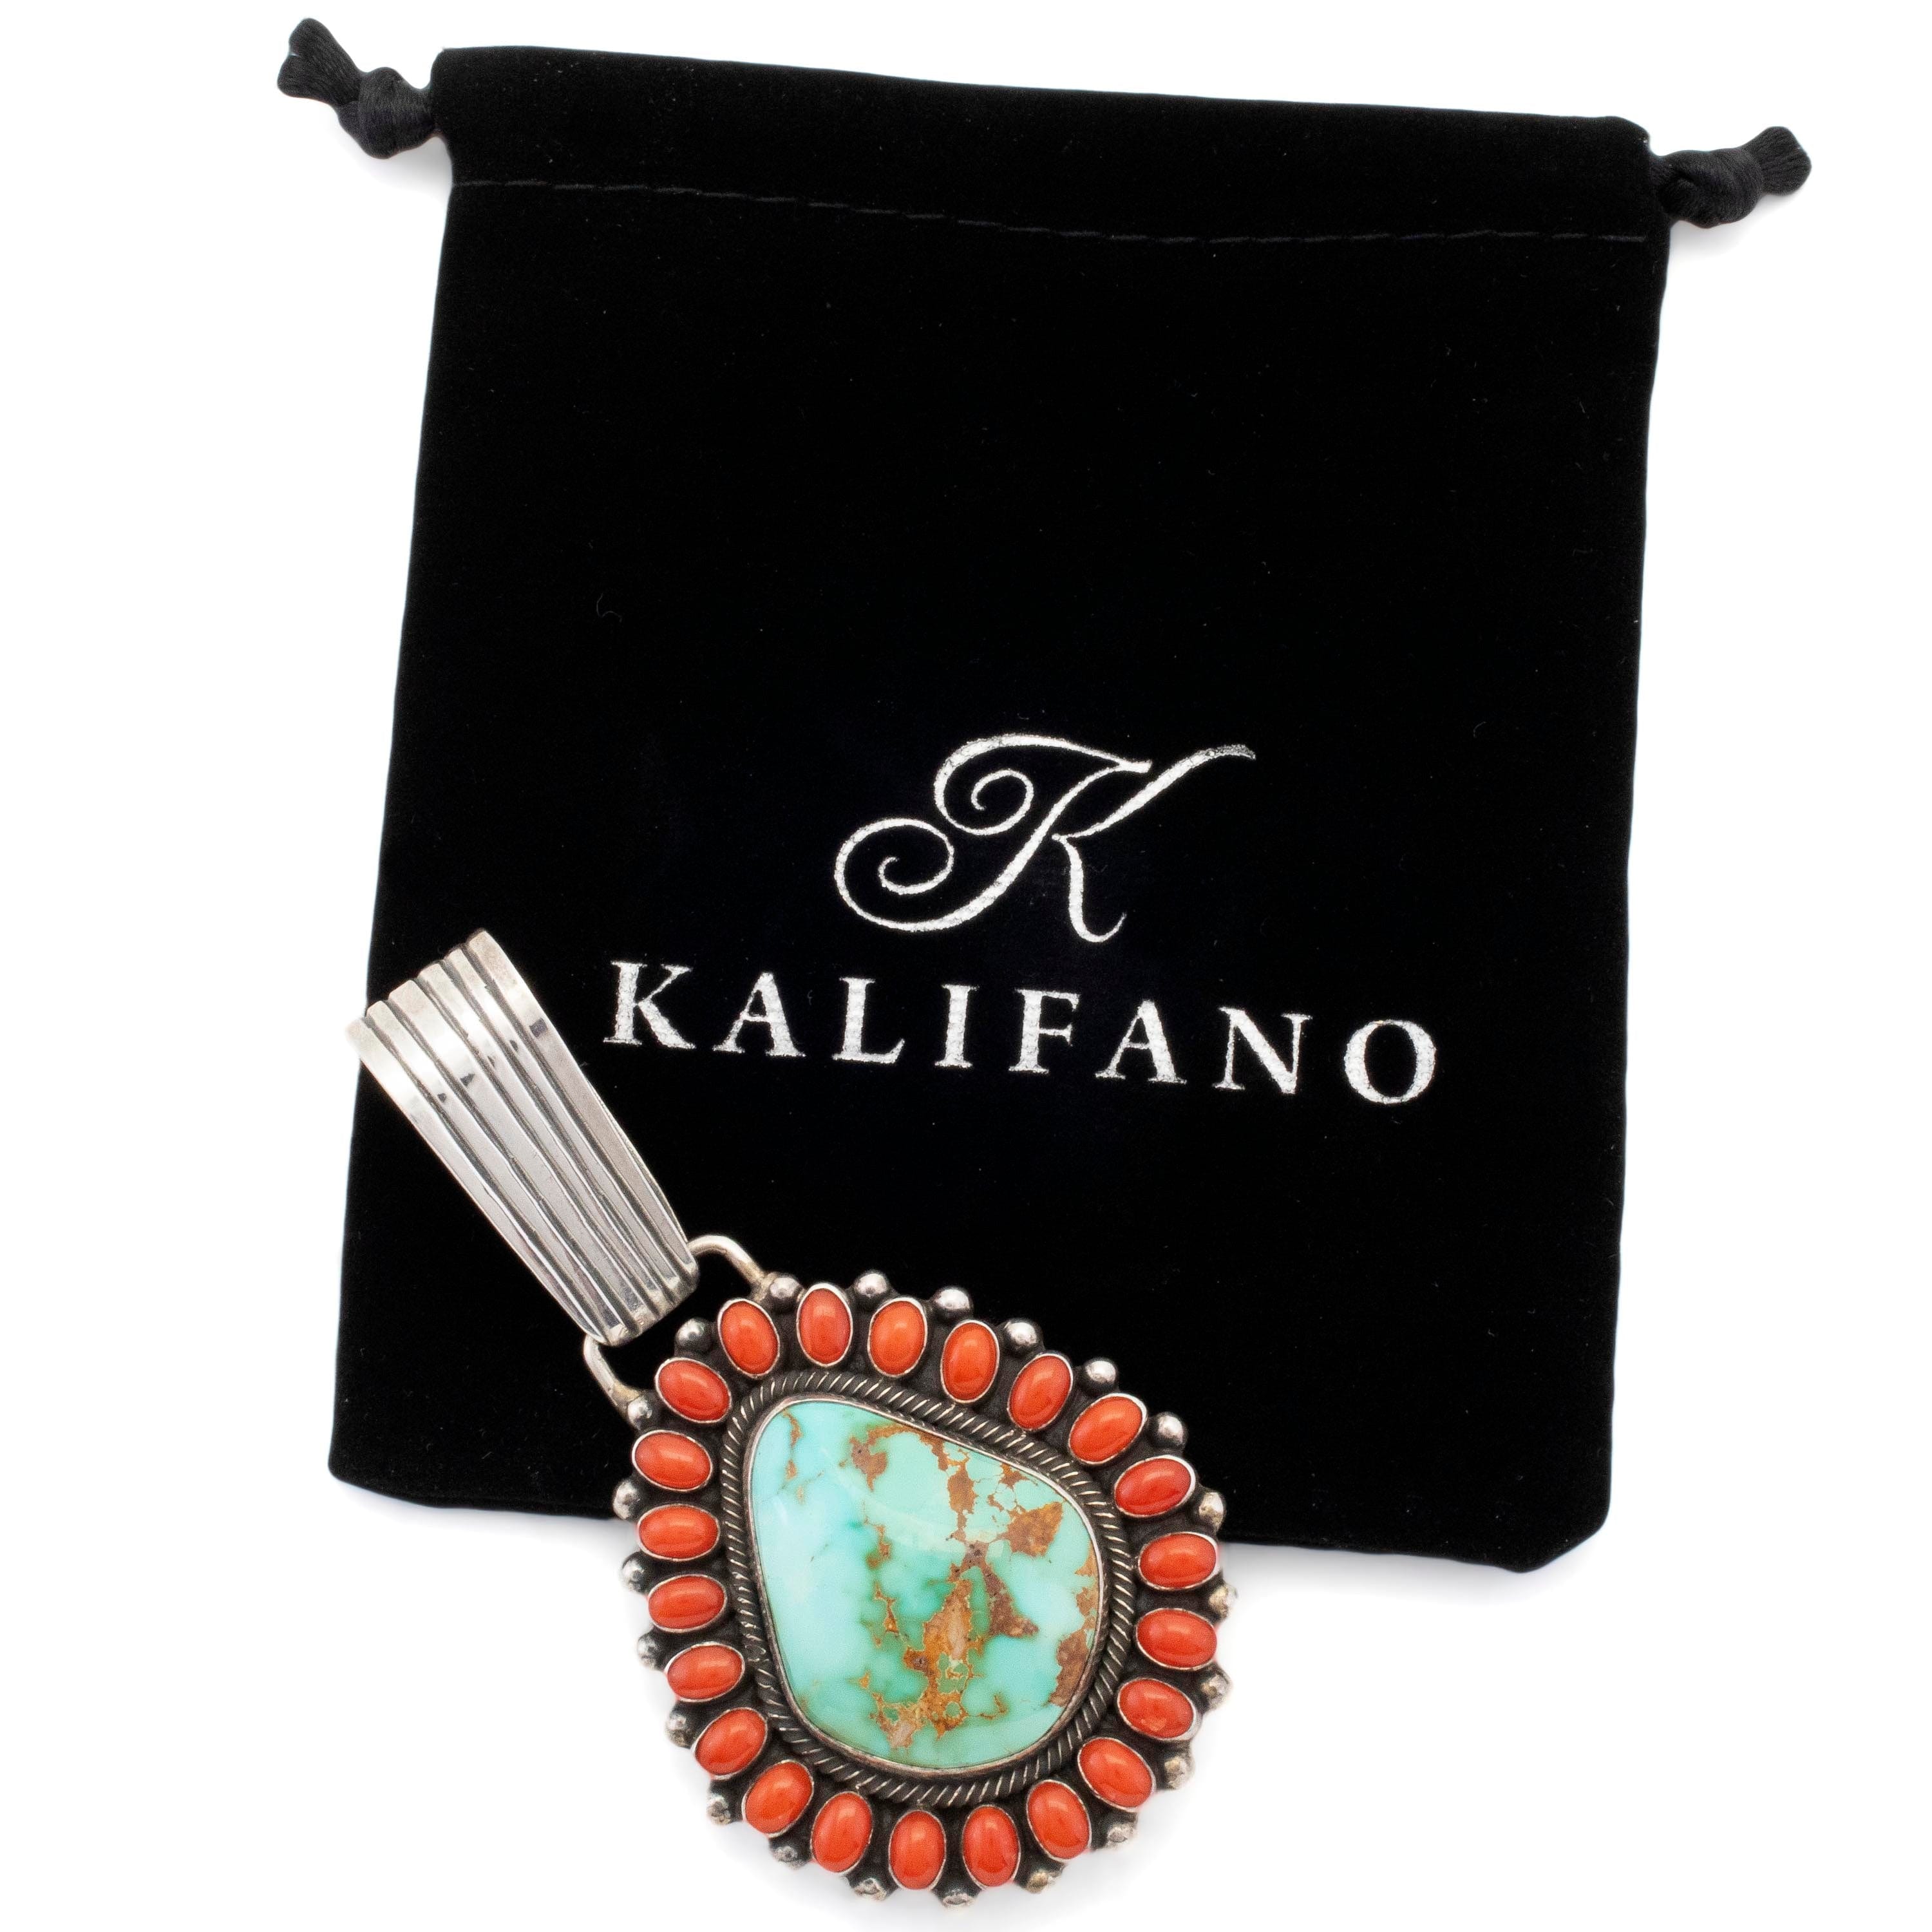 Kalifano Native American Jewelry Raymond Beard Navajo Royston Turquoise and Coral USA Native American Made 925 Sterling Silver Pendant NAN4800.003